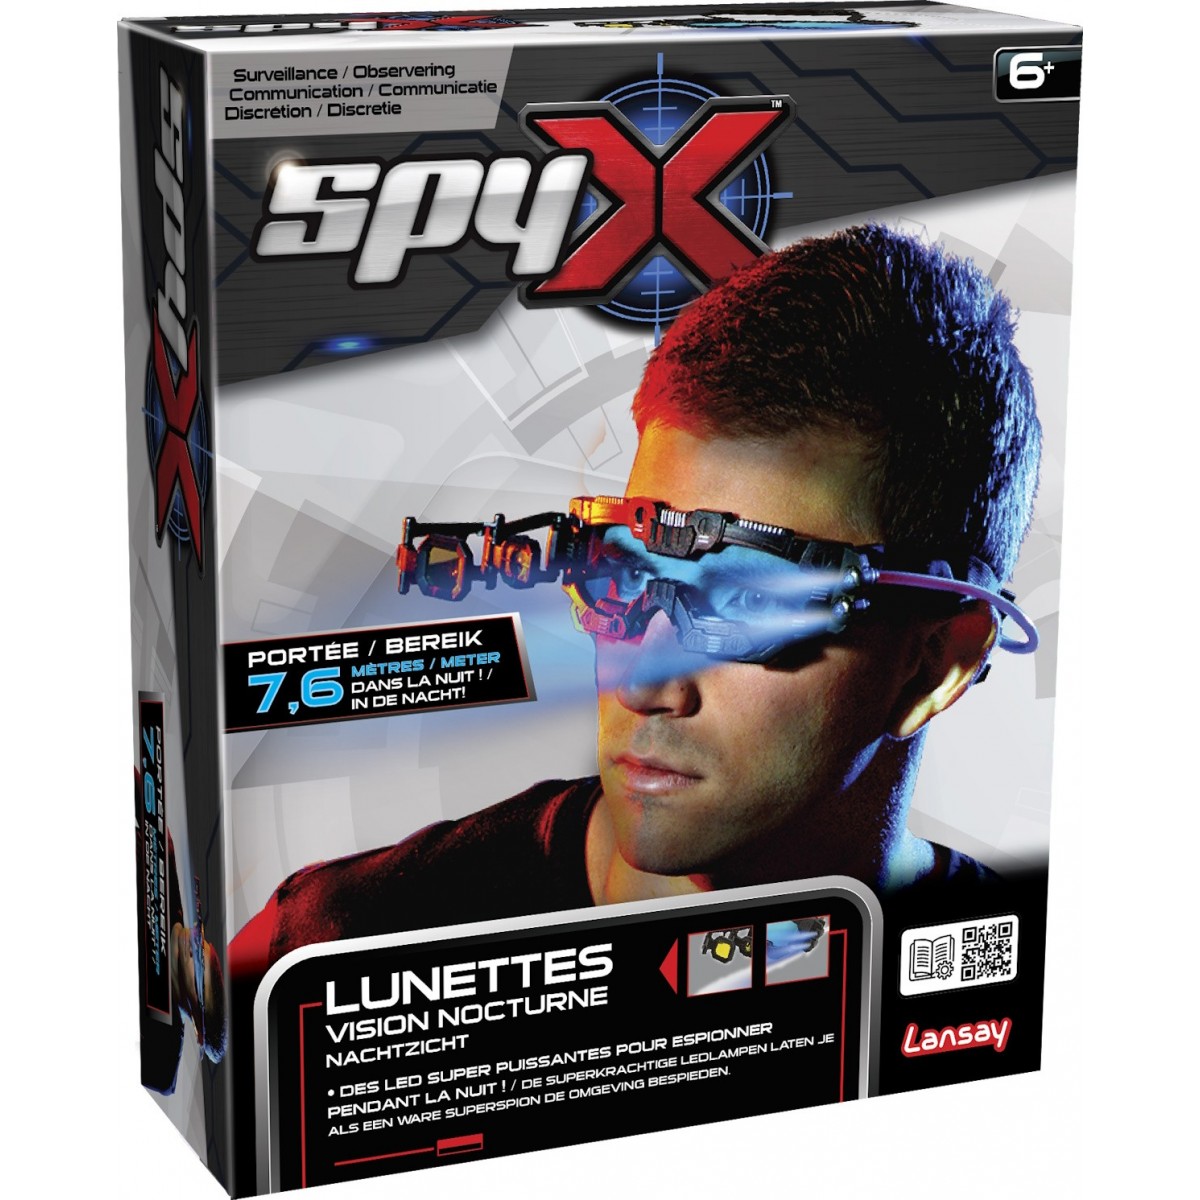 Spy X - Lunettes Vision Nocturne